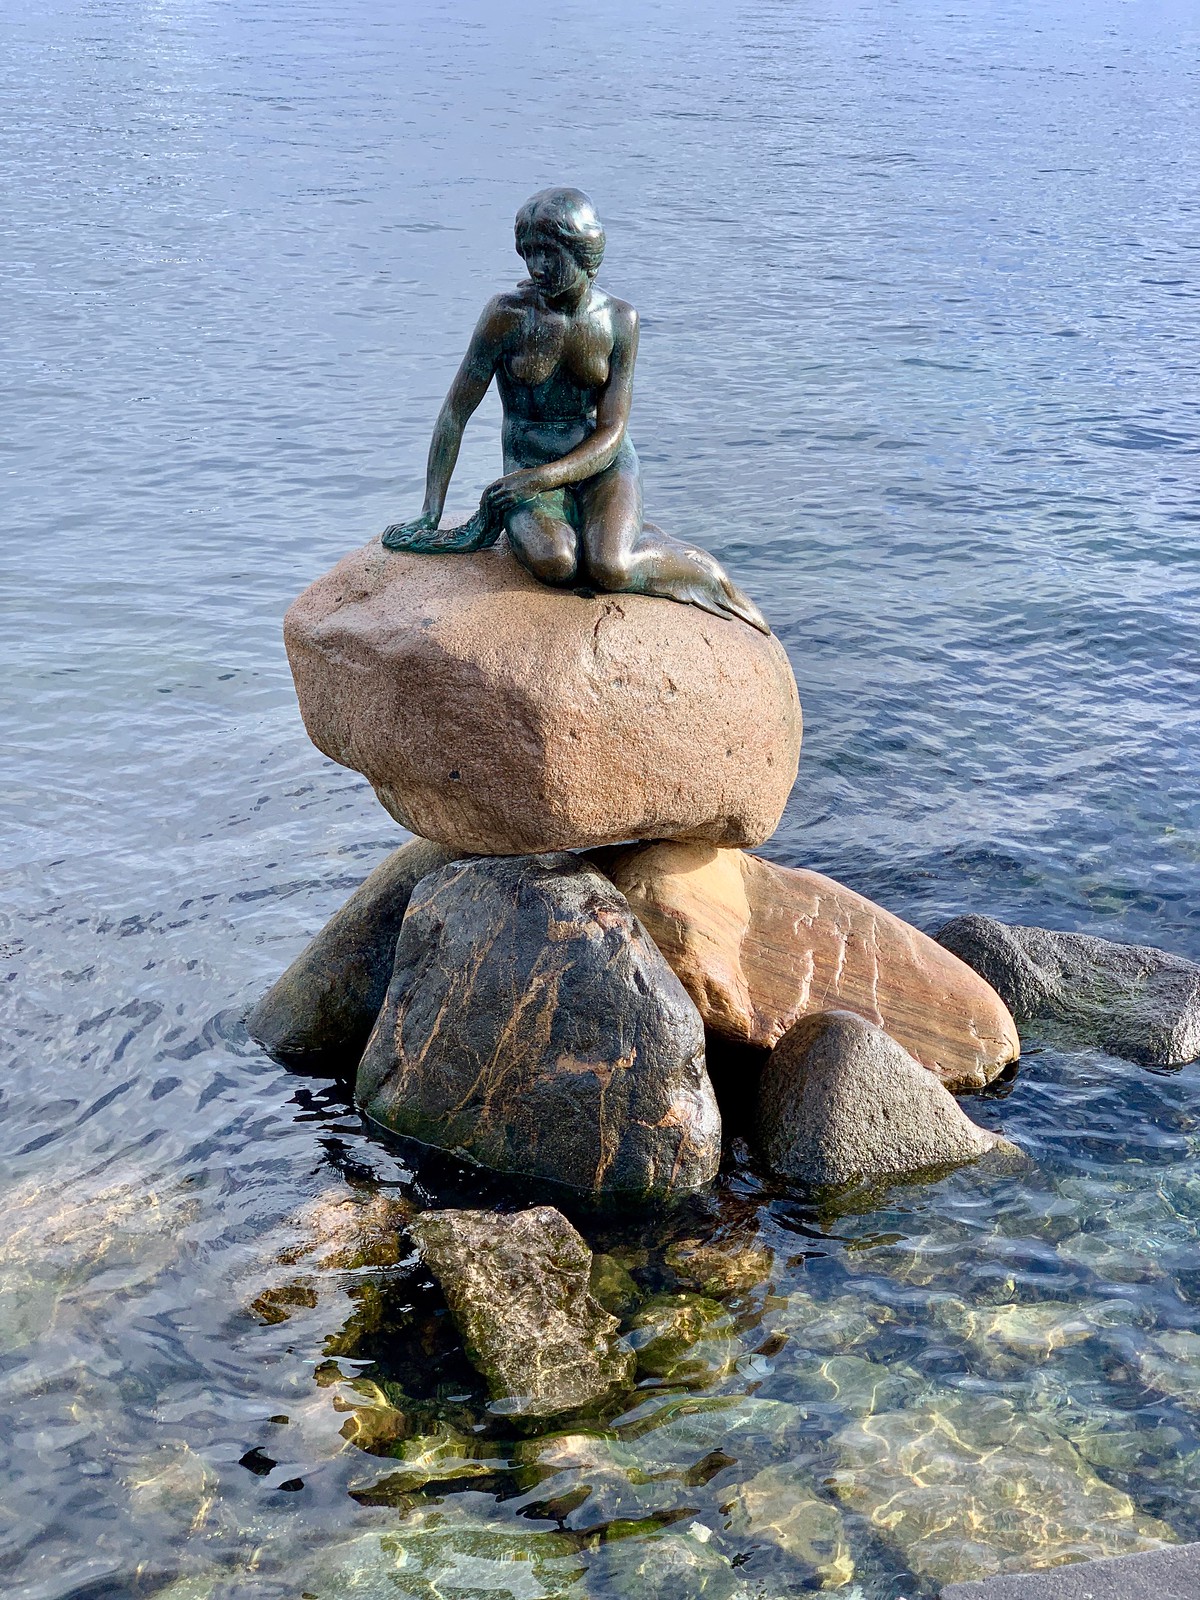 The Little Mermaid - Copenhagen